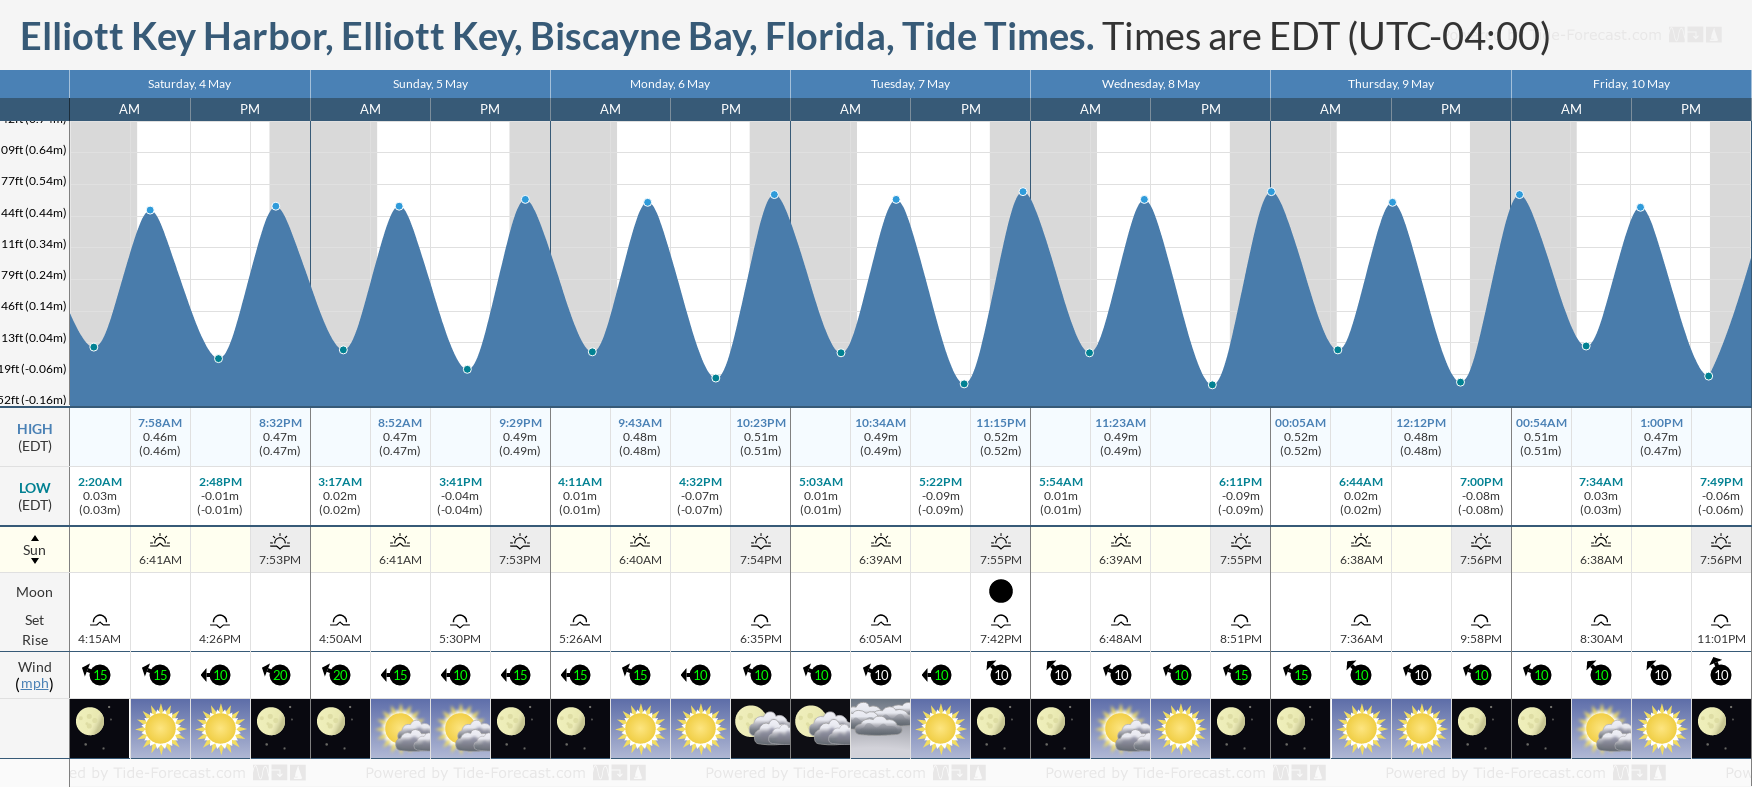 Elliott Key Harbor, Elliott Key, Biscayne Bay, Florida Tide Chart including high and low tide times for the next 7 days